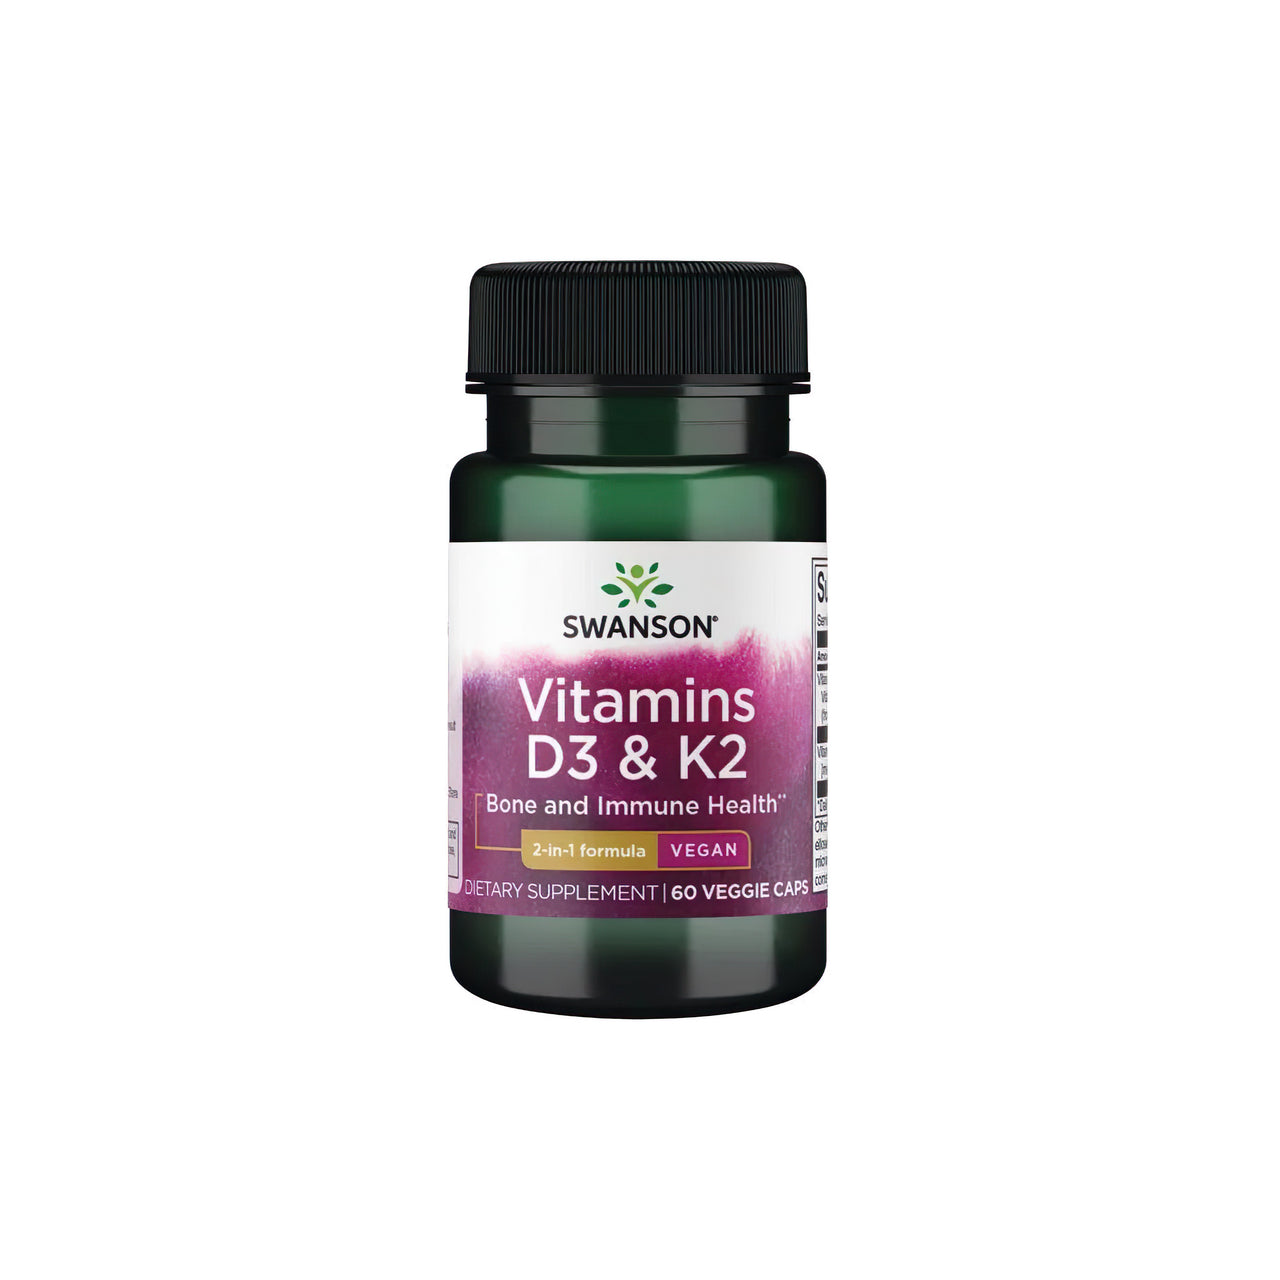 A bottle of Swanson Vitamins D3 2000 IU & K2 75 mcg 60 Vegetable Capsules for bone health and enhanced calcium absorption.